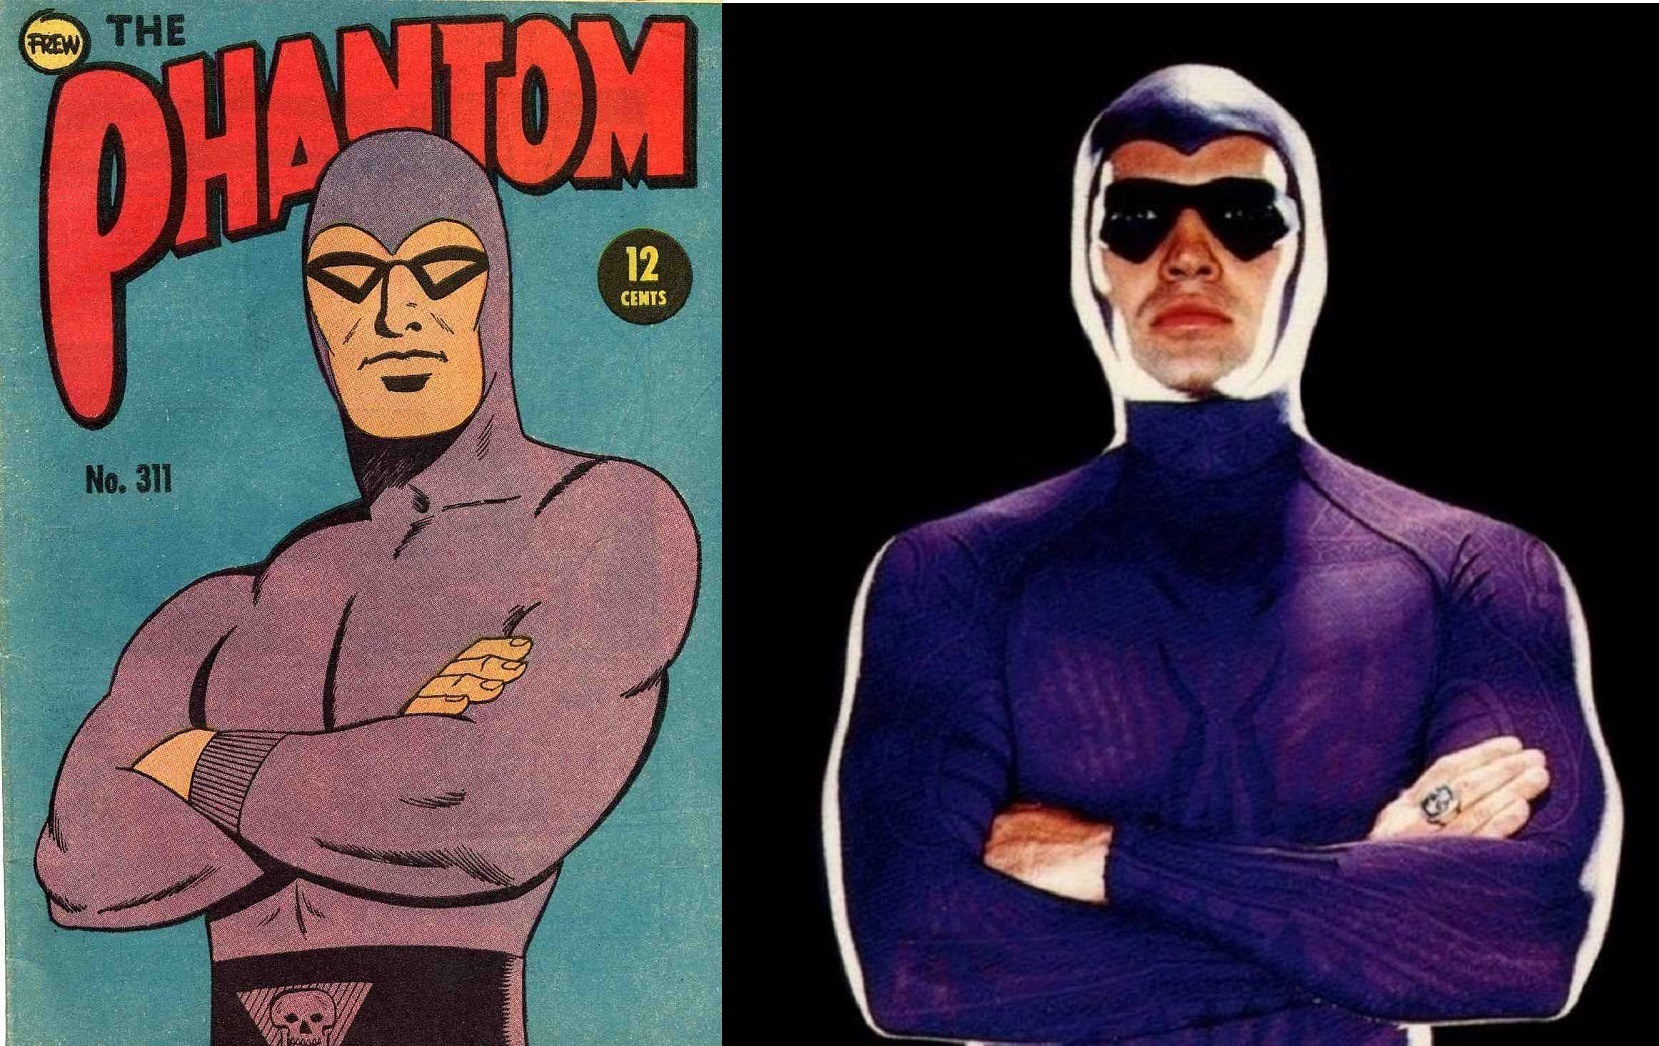 The comic-book version of The Phantom vs the film version of The Phantom (Billy Zane) in The Phantom (1996)